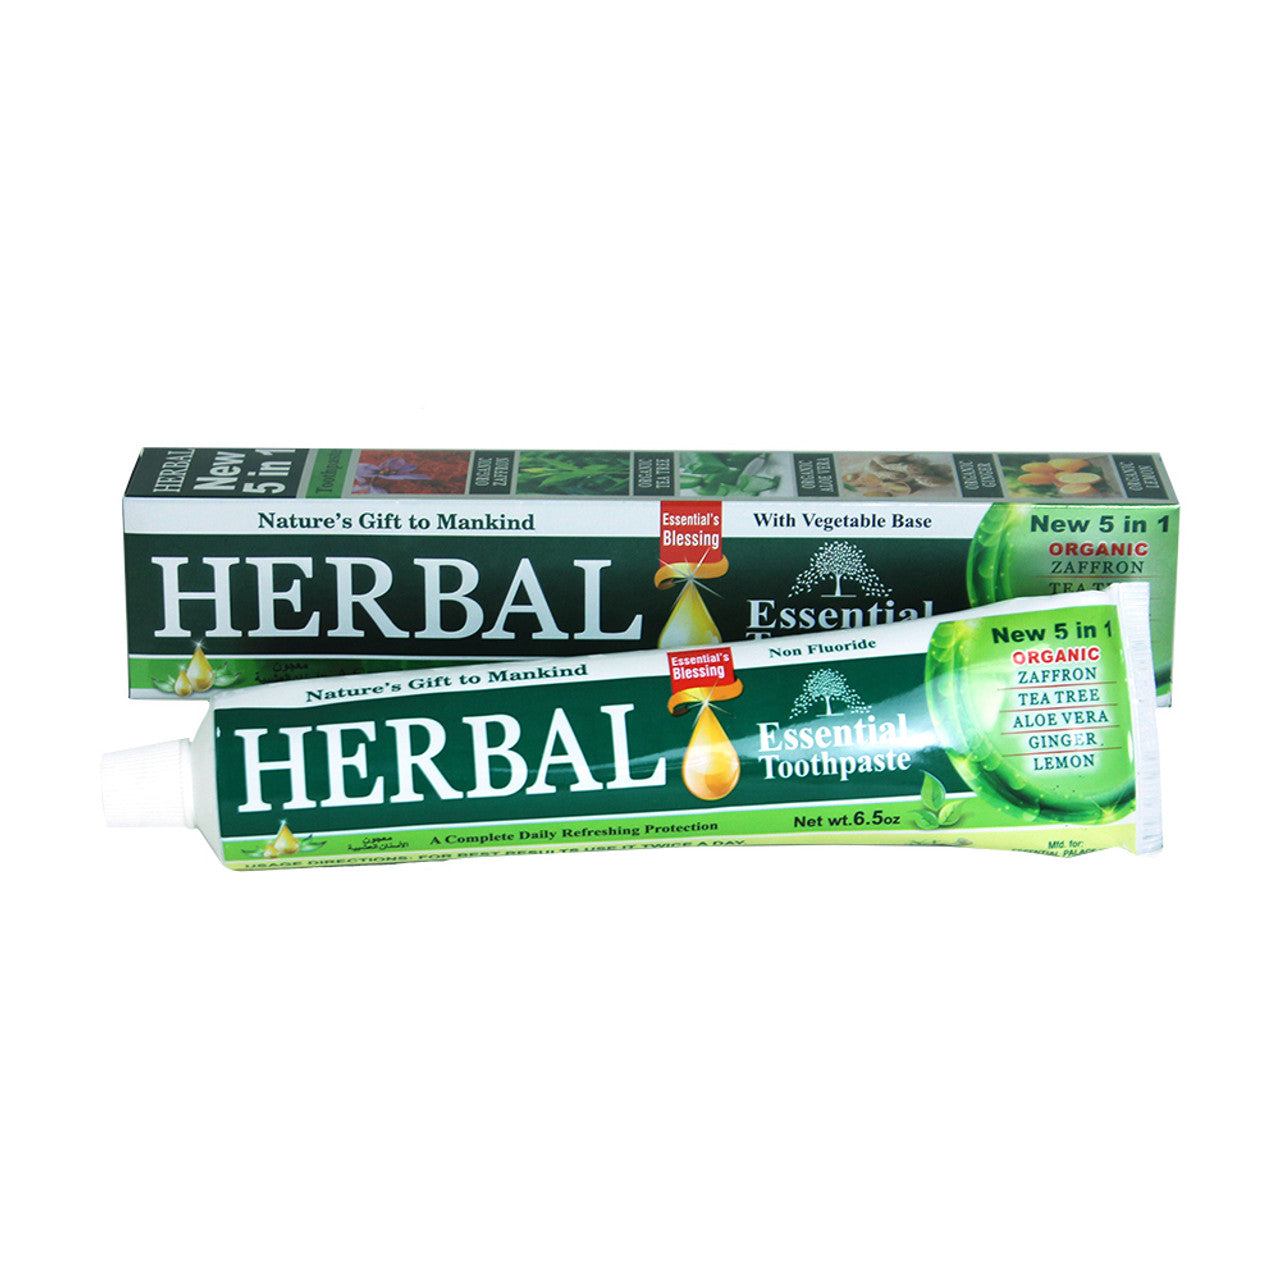 Essential Palace: Herbal Essential Toothpaste